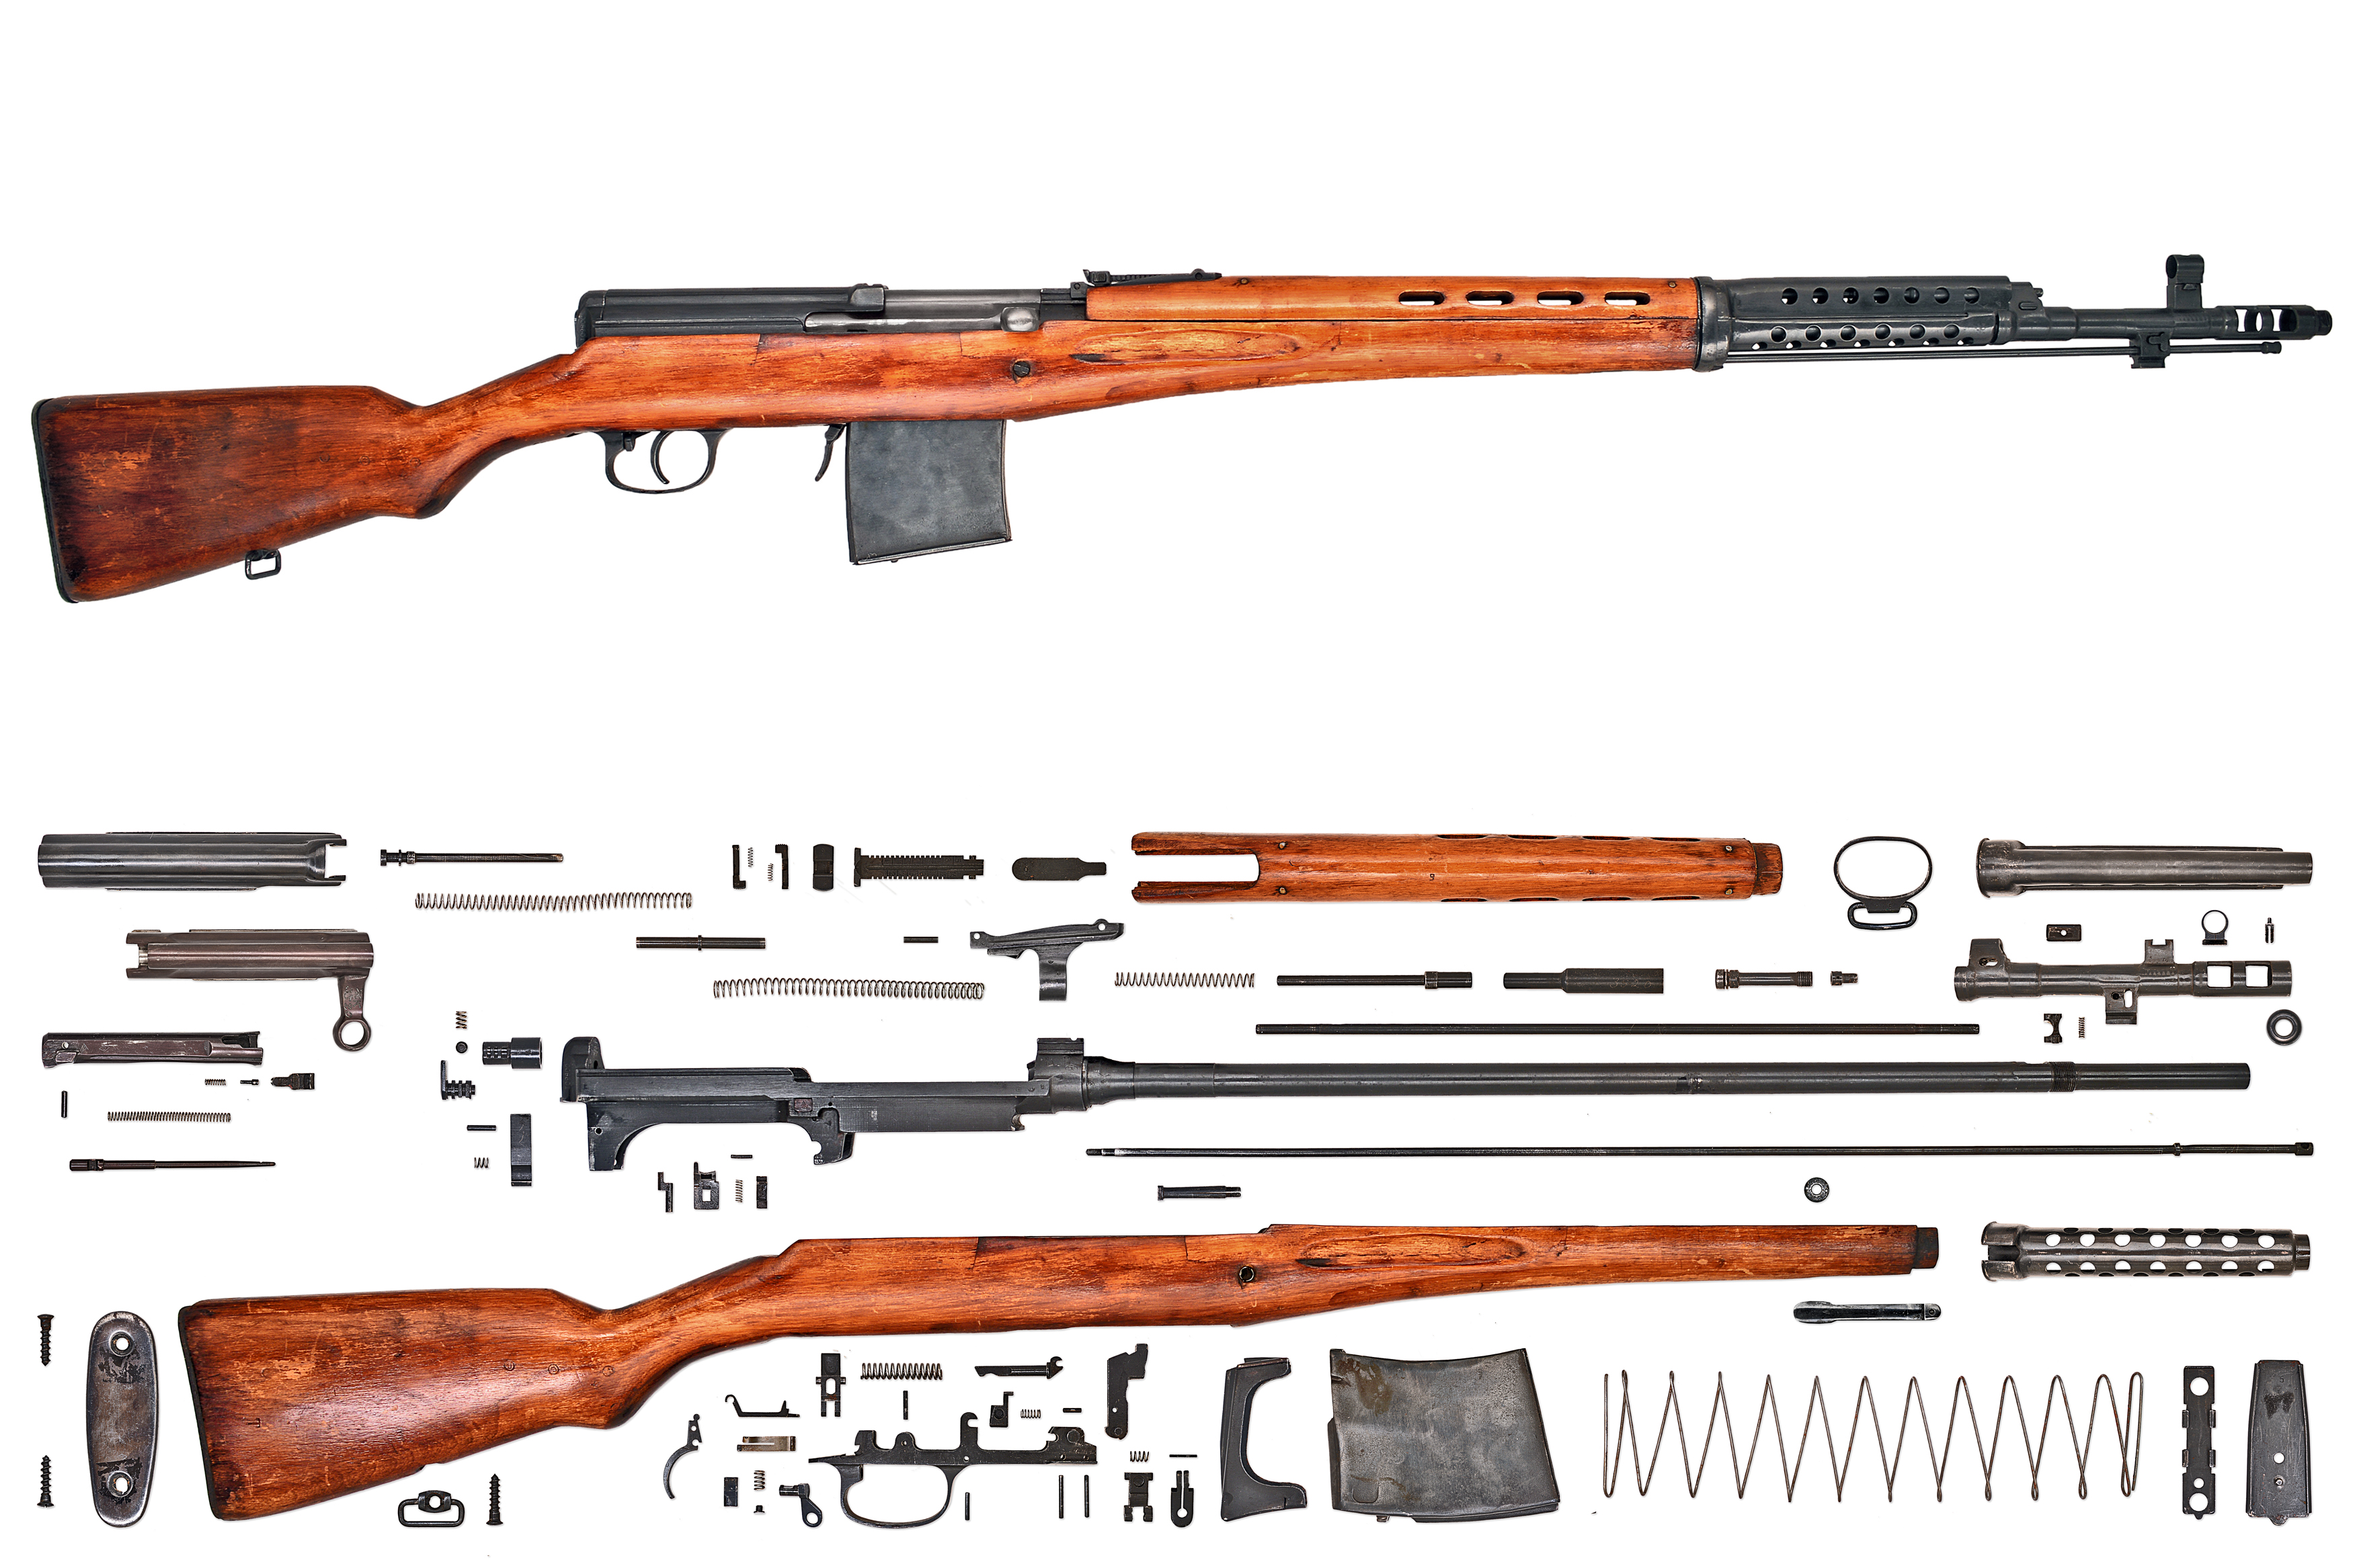 Svt-40 Rifle #20